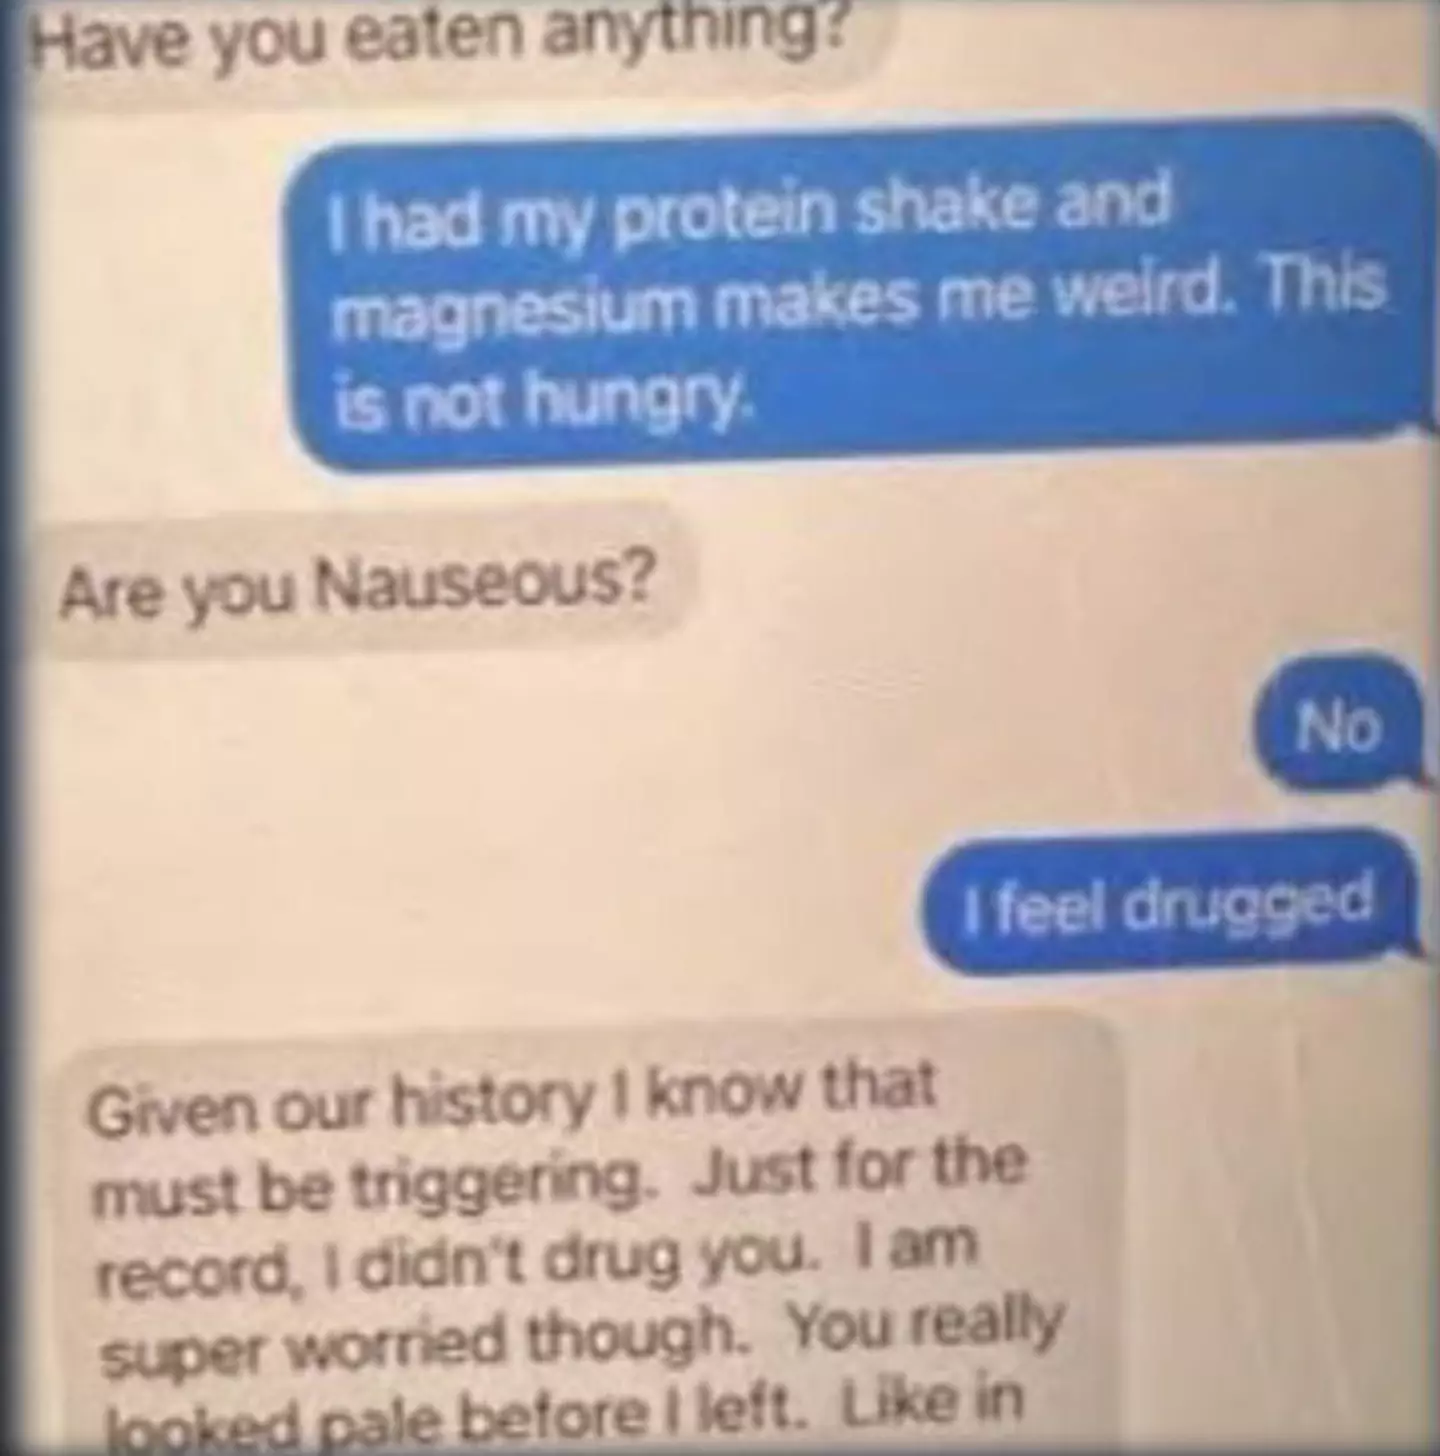 Craig's text messages to Angela according to the arrest affidavit.